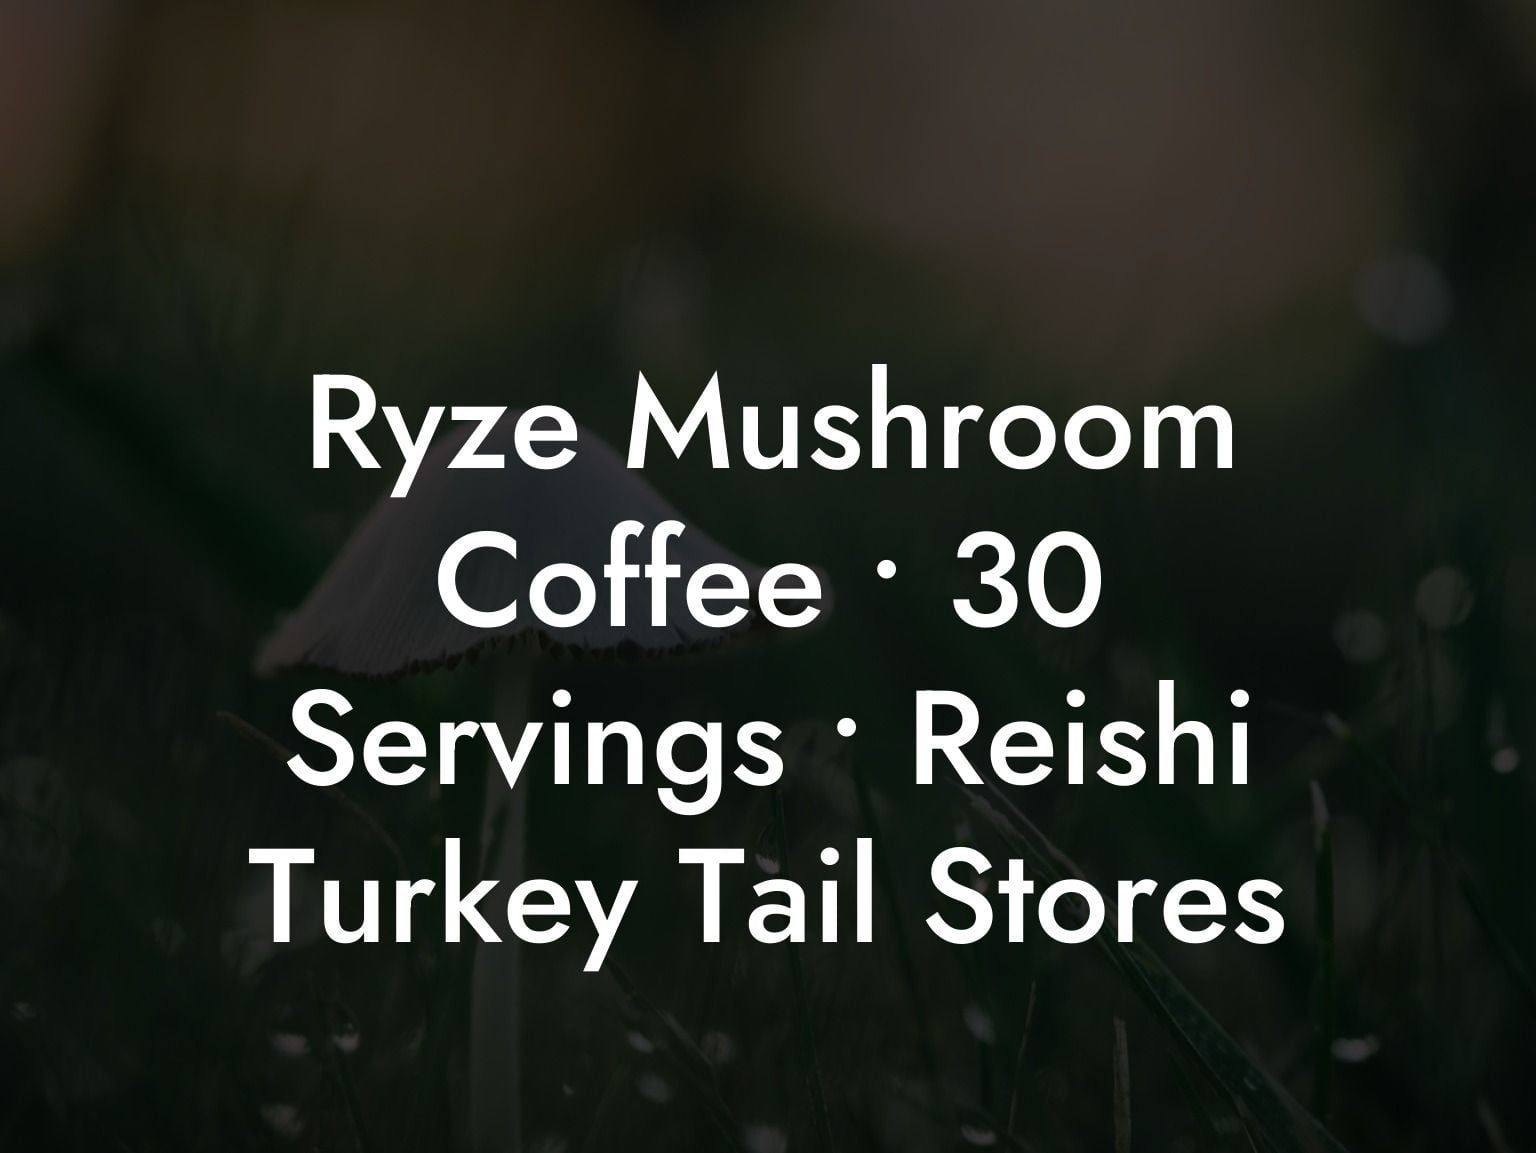 Ryze Mushroom Coffee • 30 Servings • Reishi Turkey Tail Stores